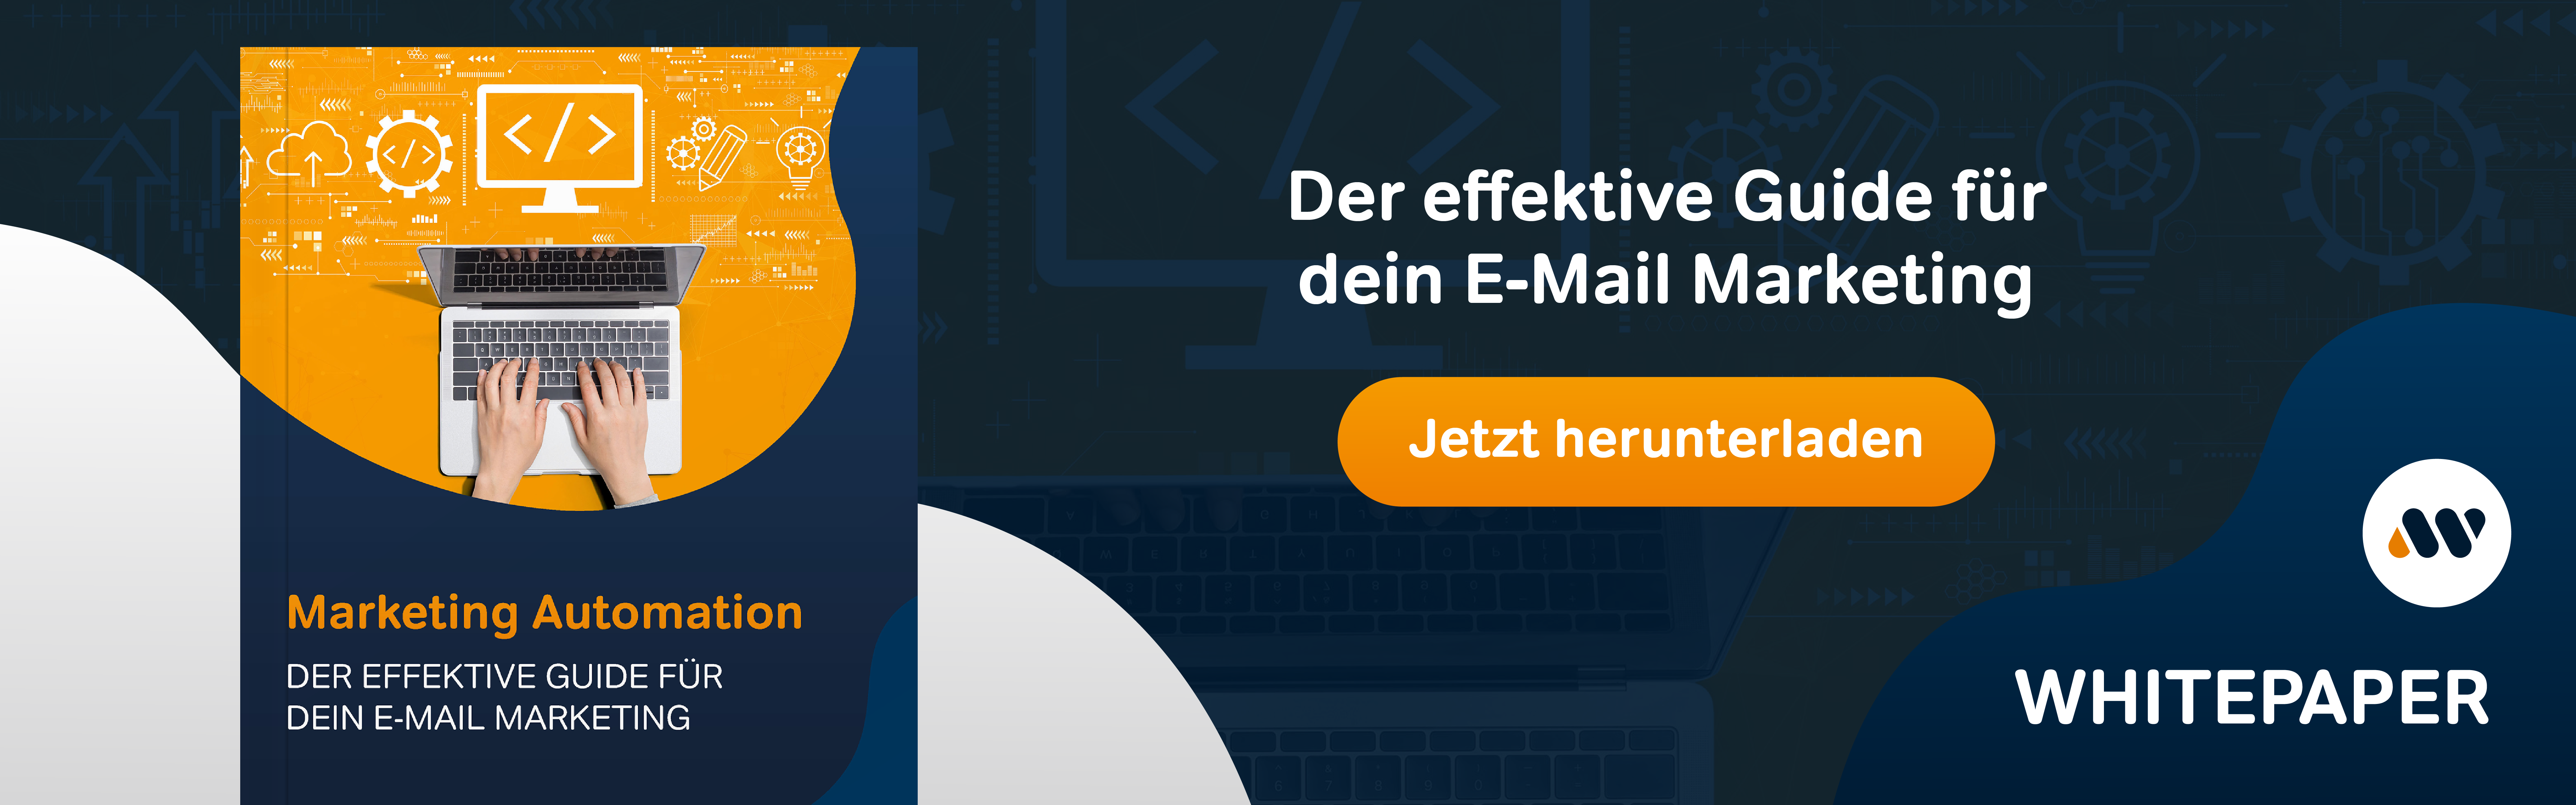 Whitepaper marketing automation mailingwork banner mobil